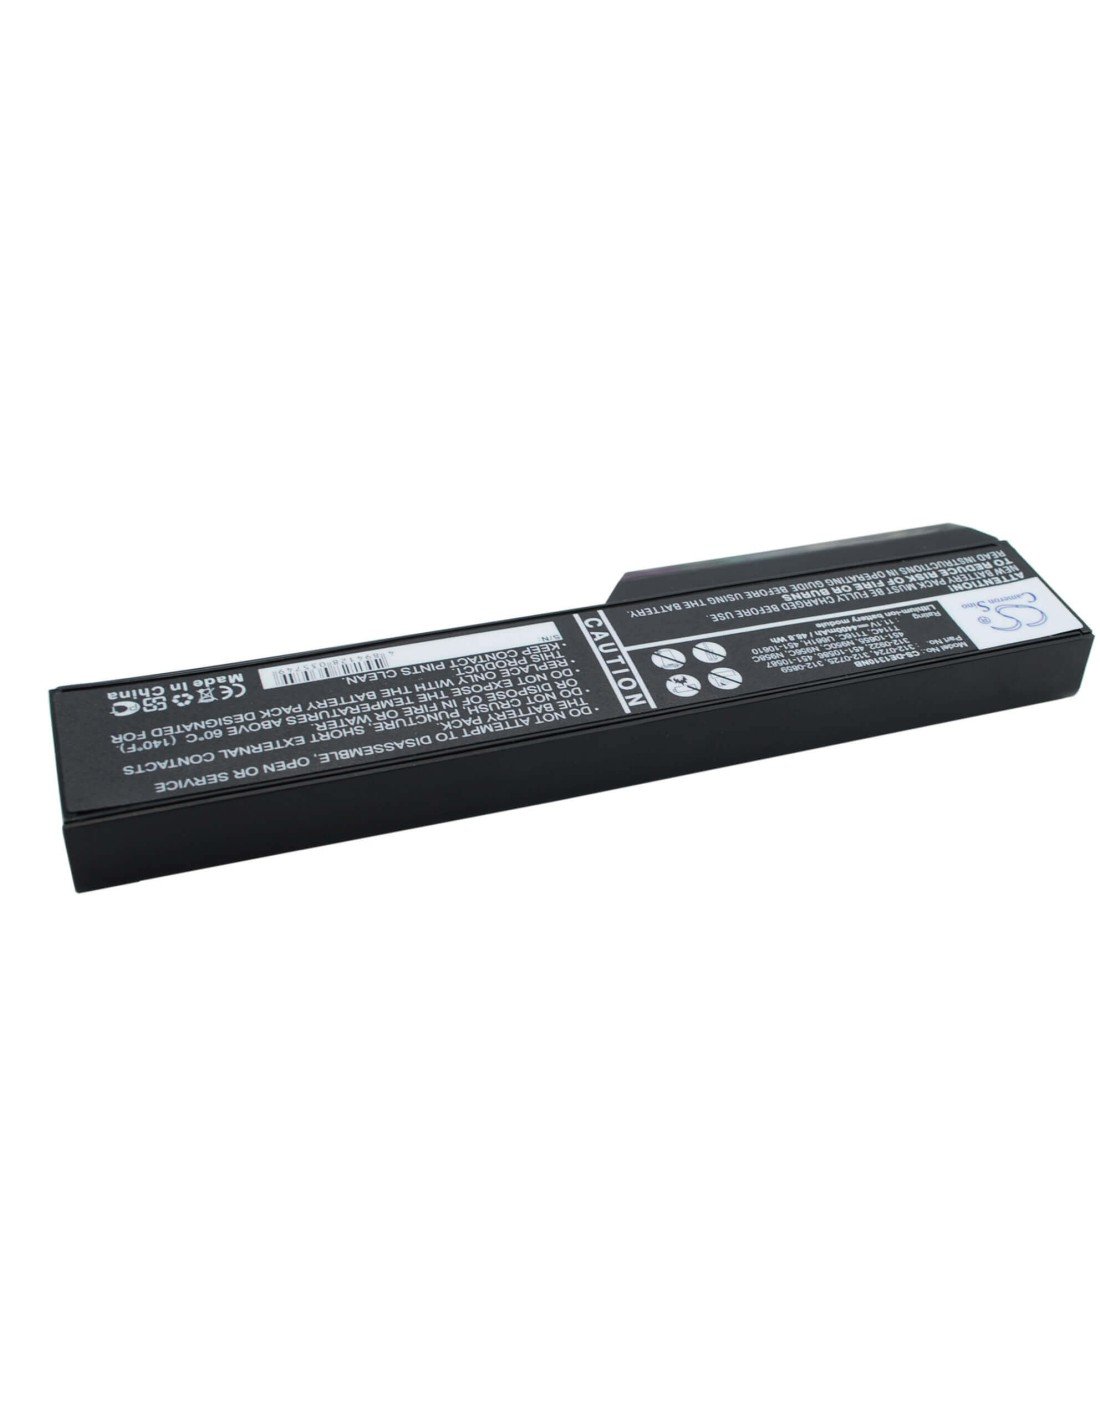 Black Battery for Dell Vostro 1310, Vostro 1510, Vostro 2510 11.1V, 4400mAh - 48.84Wh